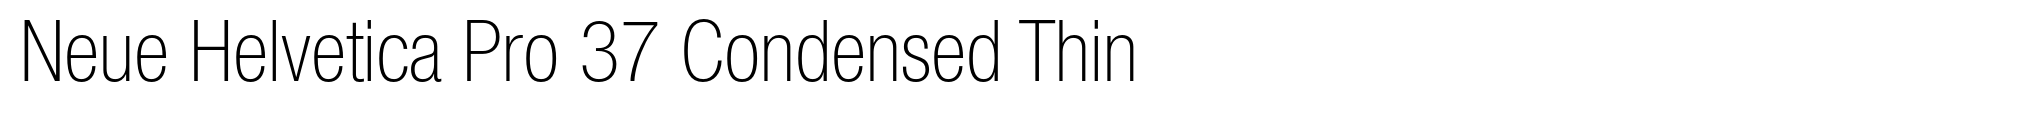 Neue Helvetica Pro 37 Condensed Thin image